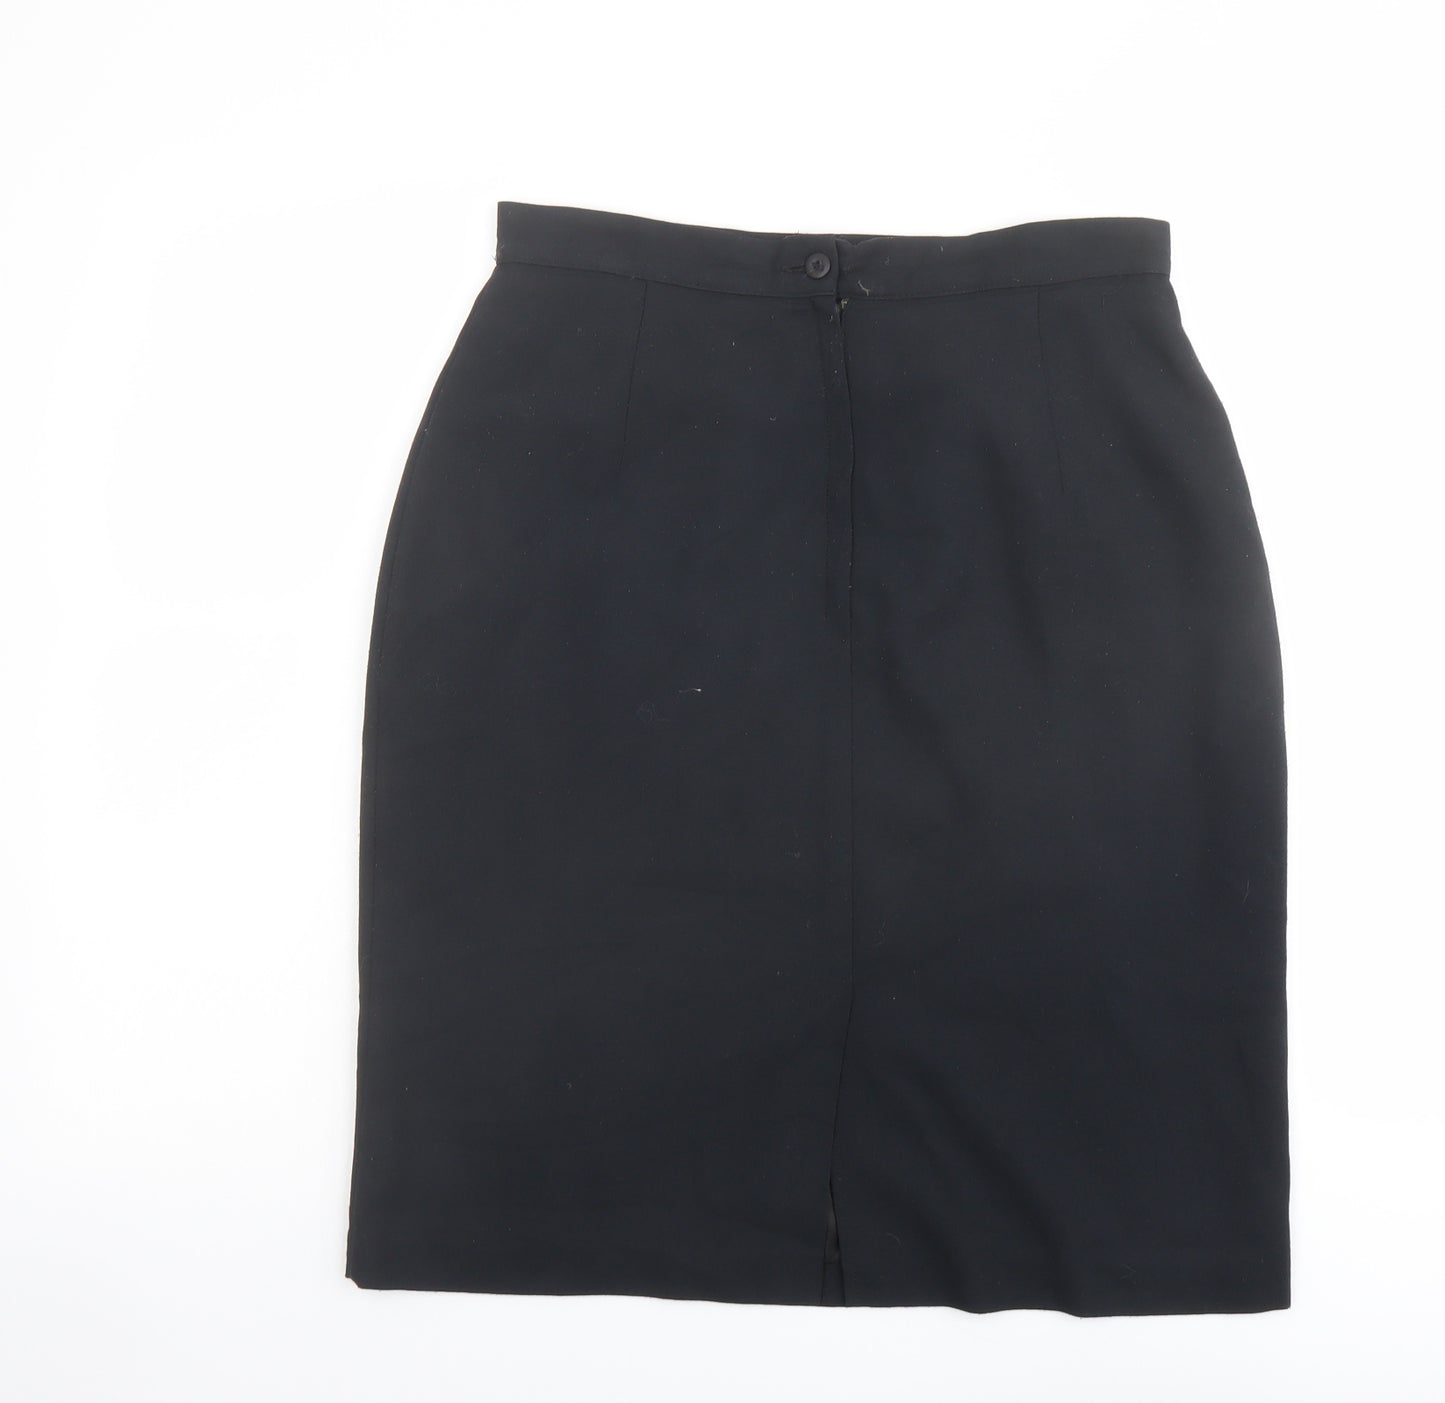 Jessica Reid Womens Black Polyester A-Line Skirt Size 14 Zip